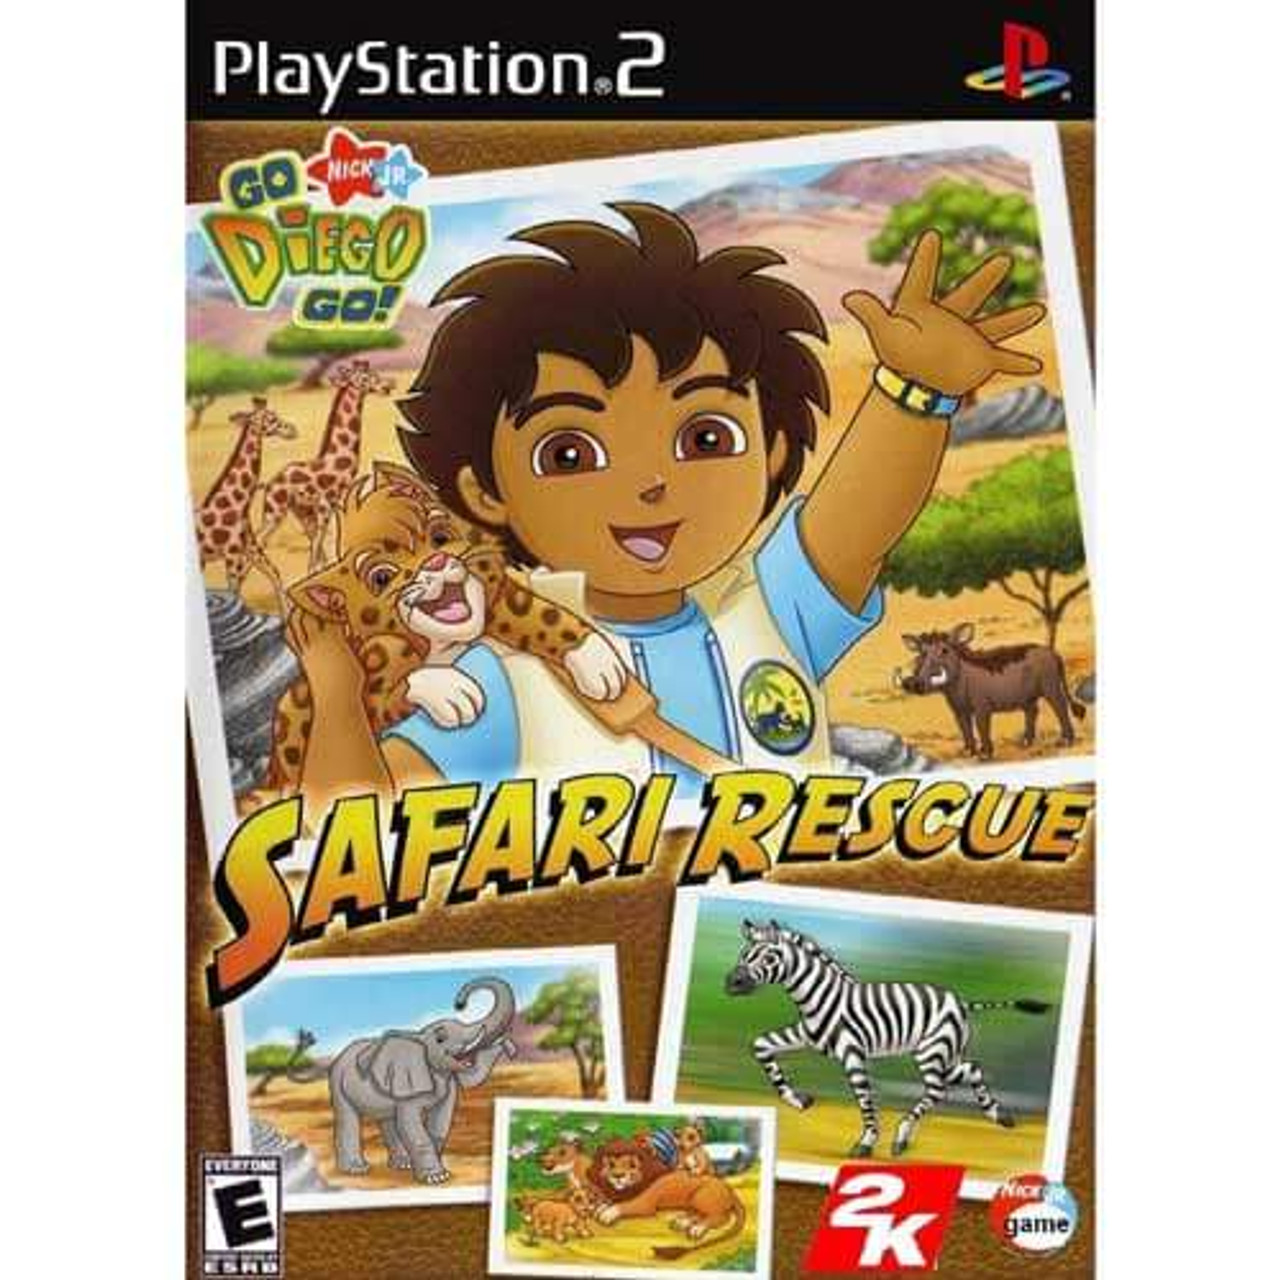 diego safari rescue game